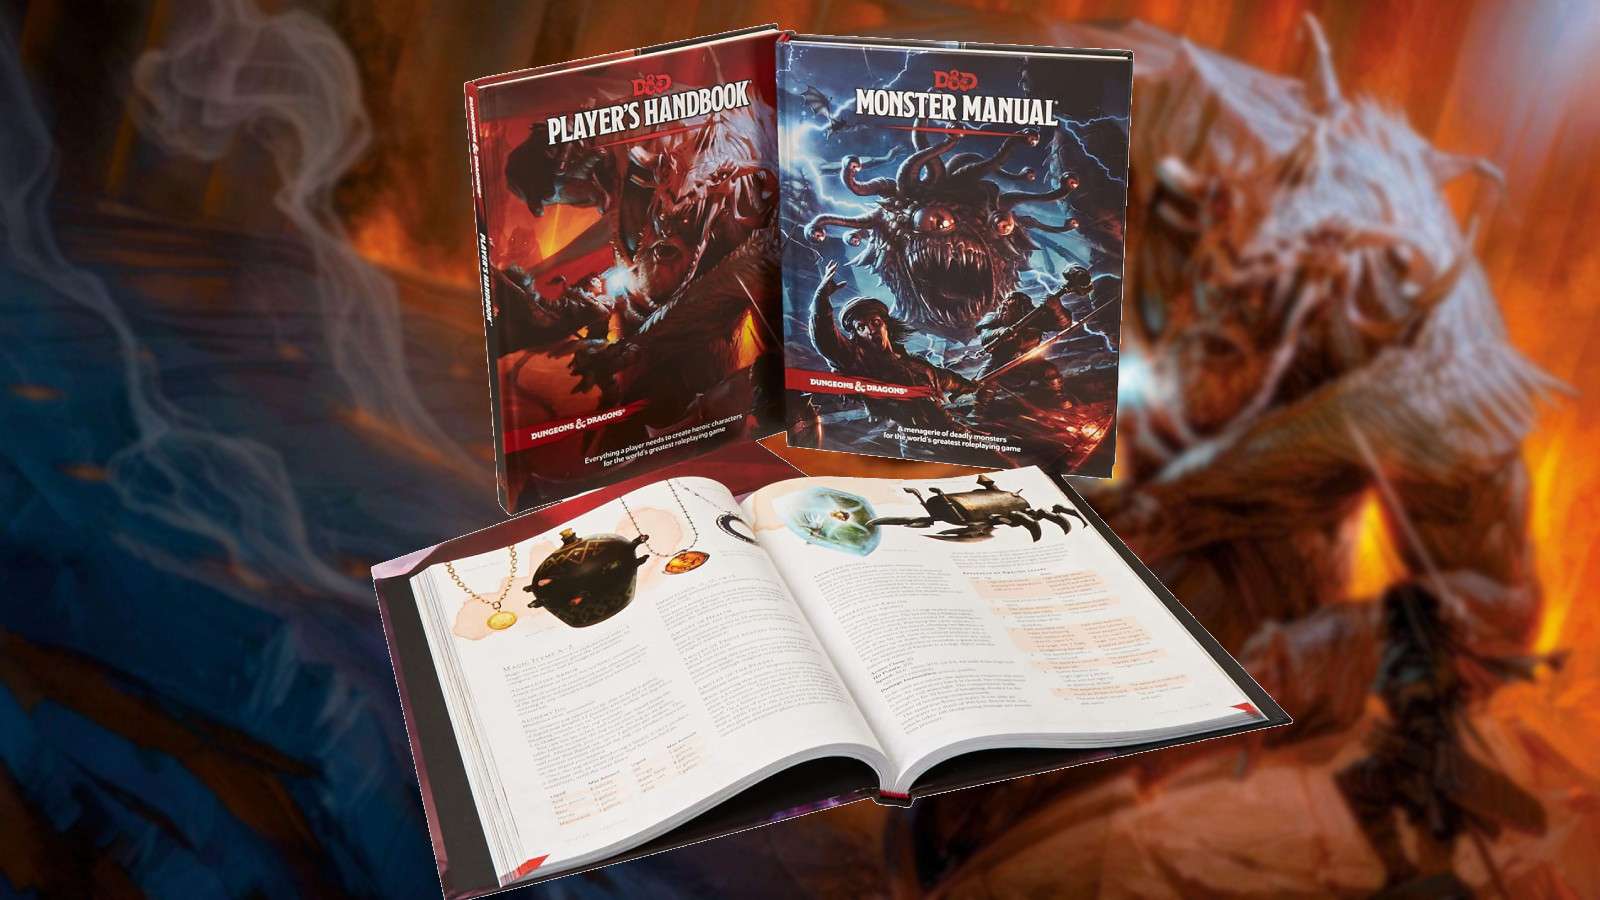 D&D Player's Handbook, Monster Manual and open DM's guide